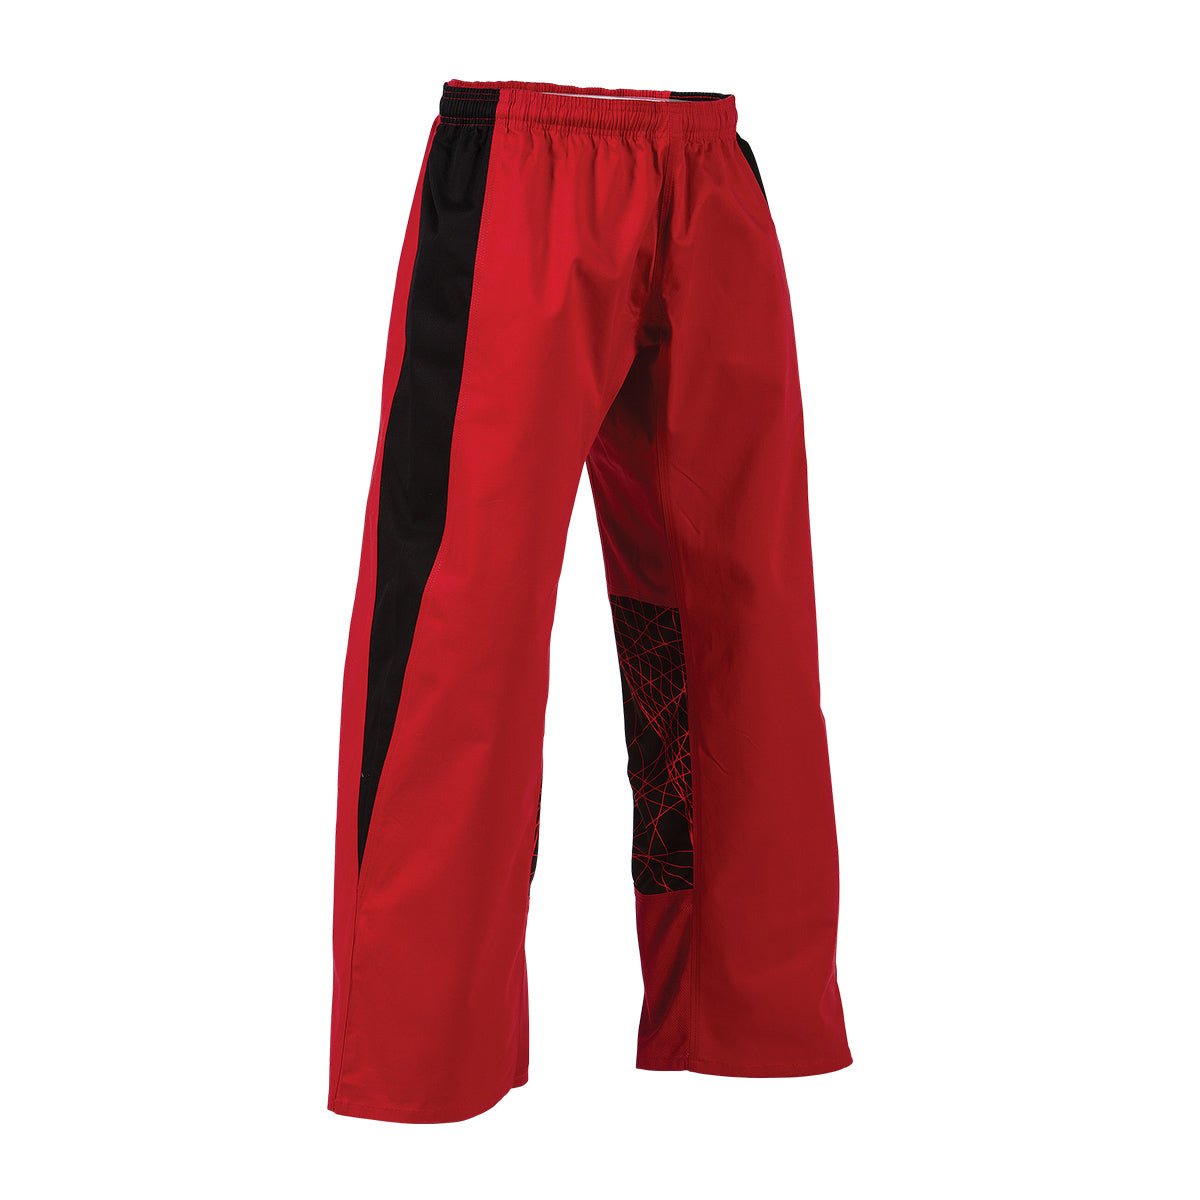 Electric EasyFit Uniform Pants Red/Black